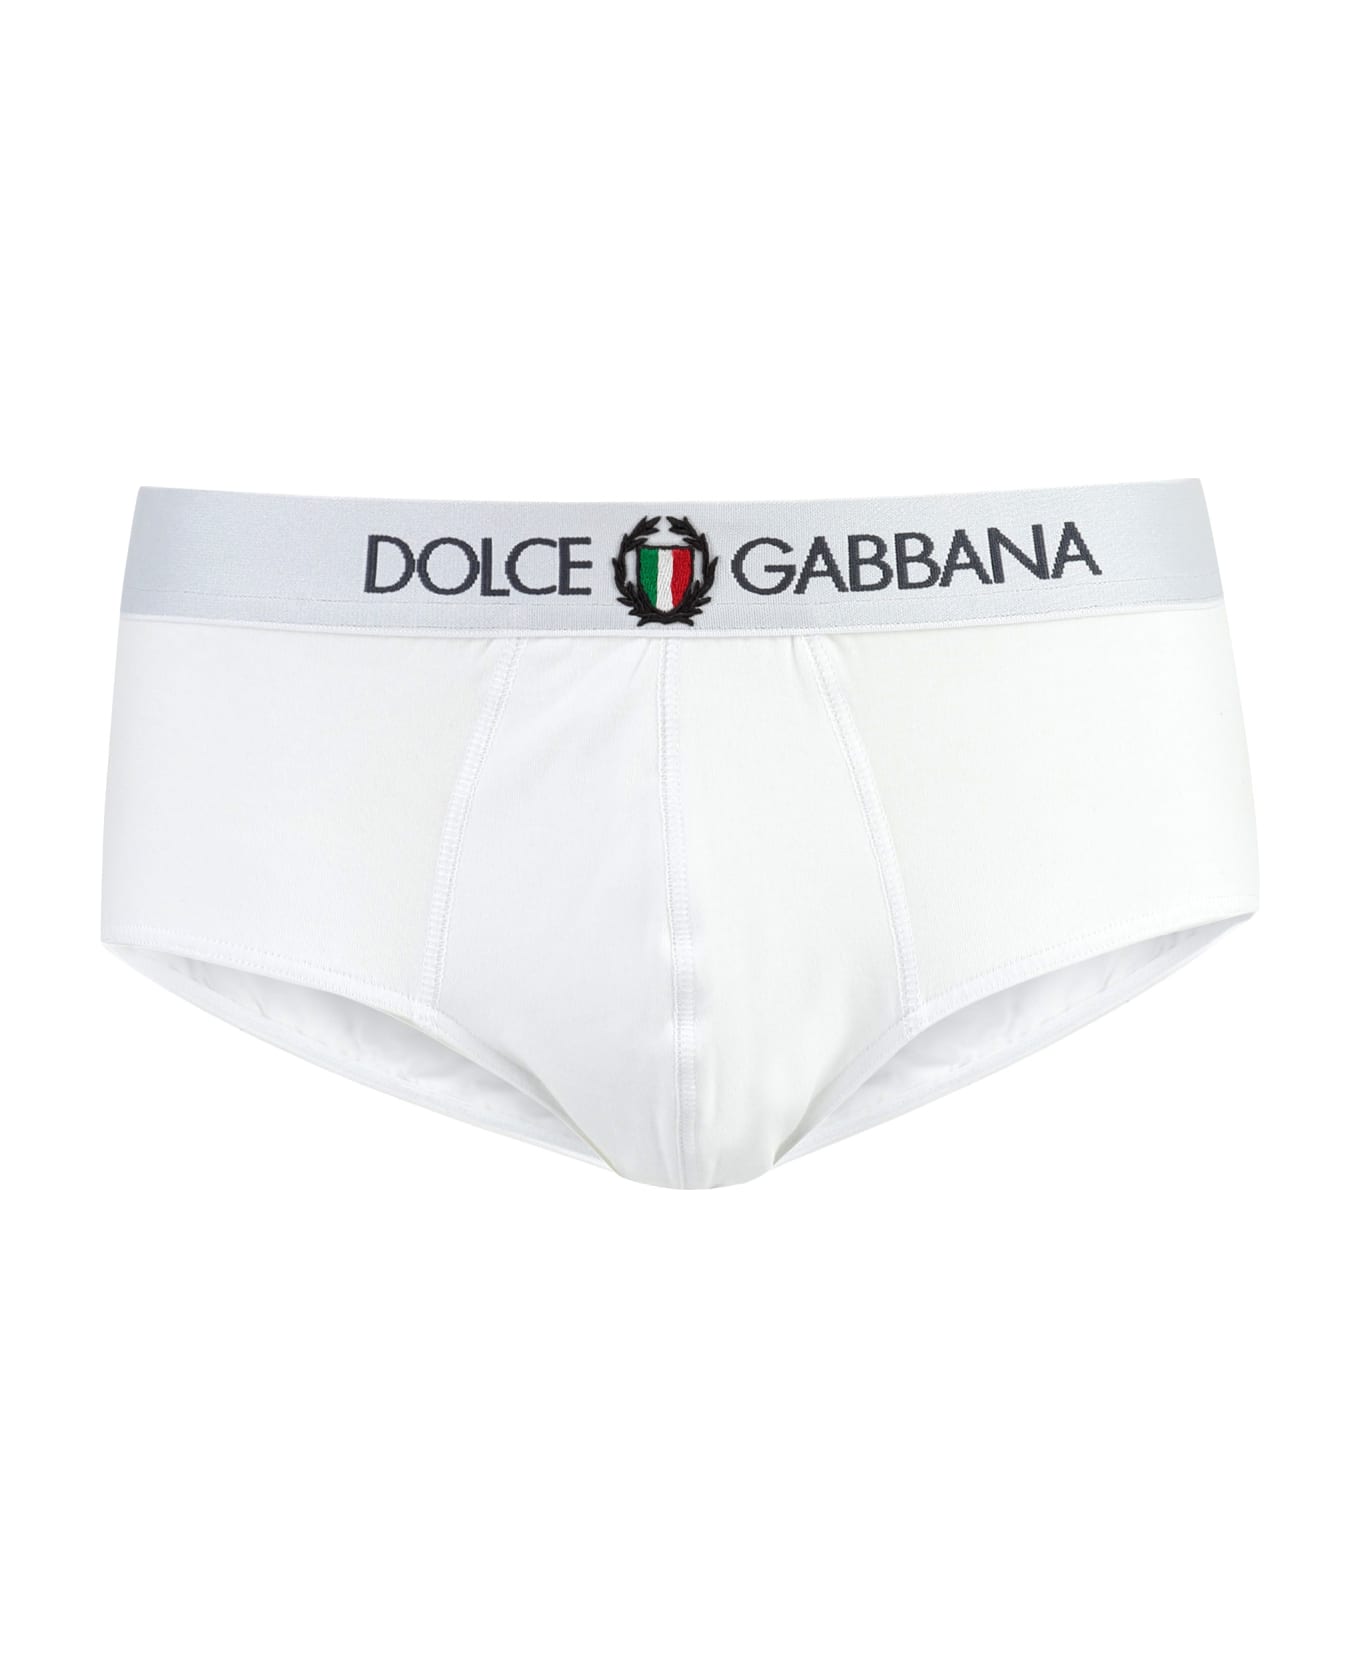 Dolce & Gabbana Brando Cotton Briefs - White ショーツ